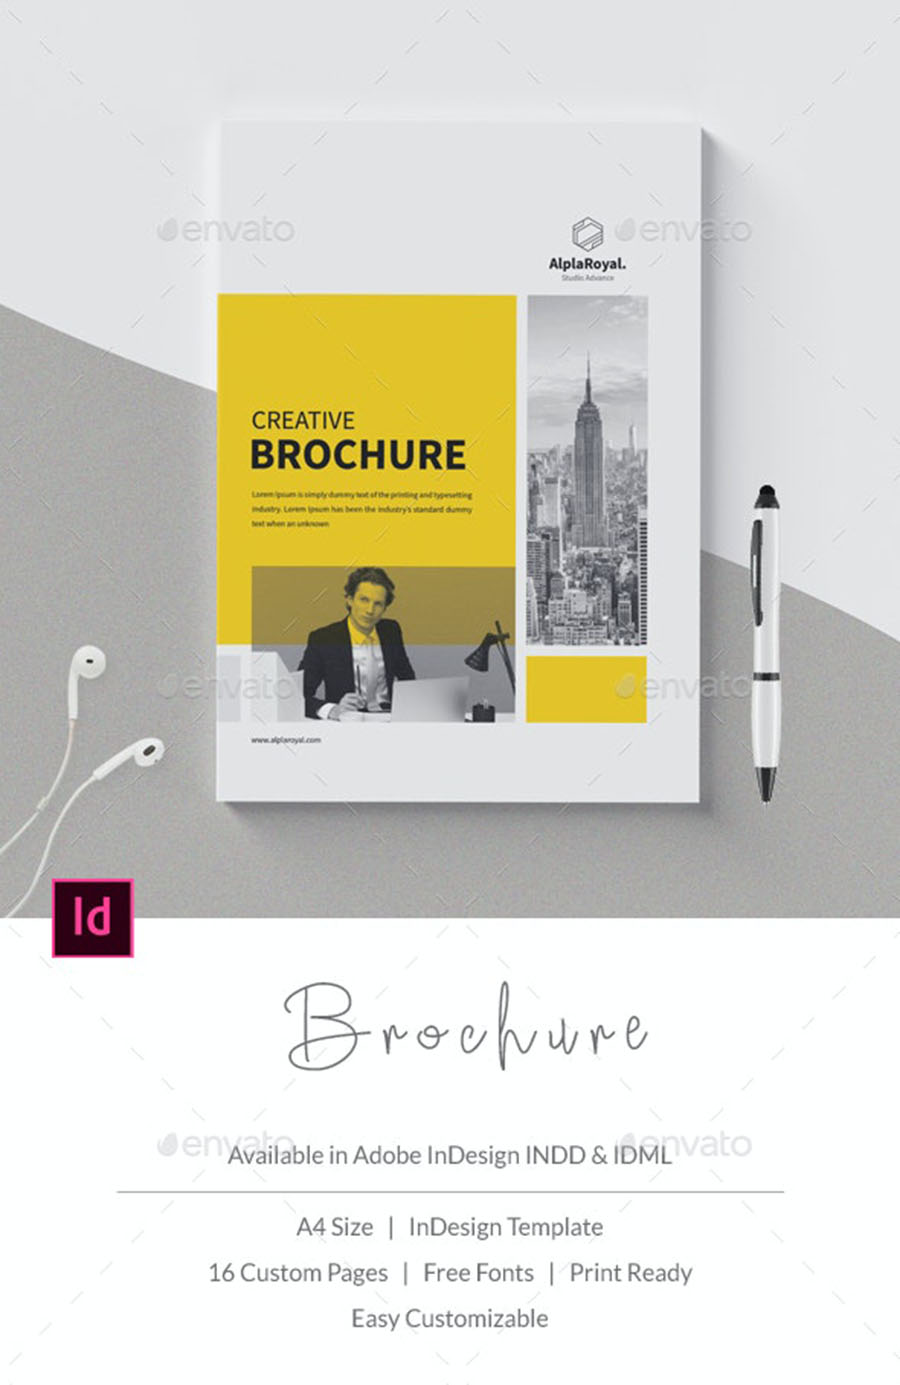 Creative Company Brochure Template